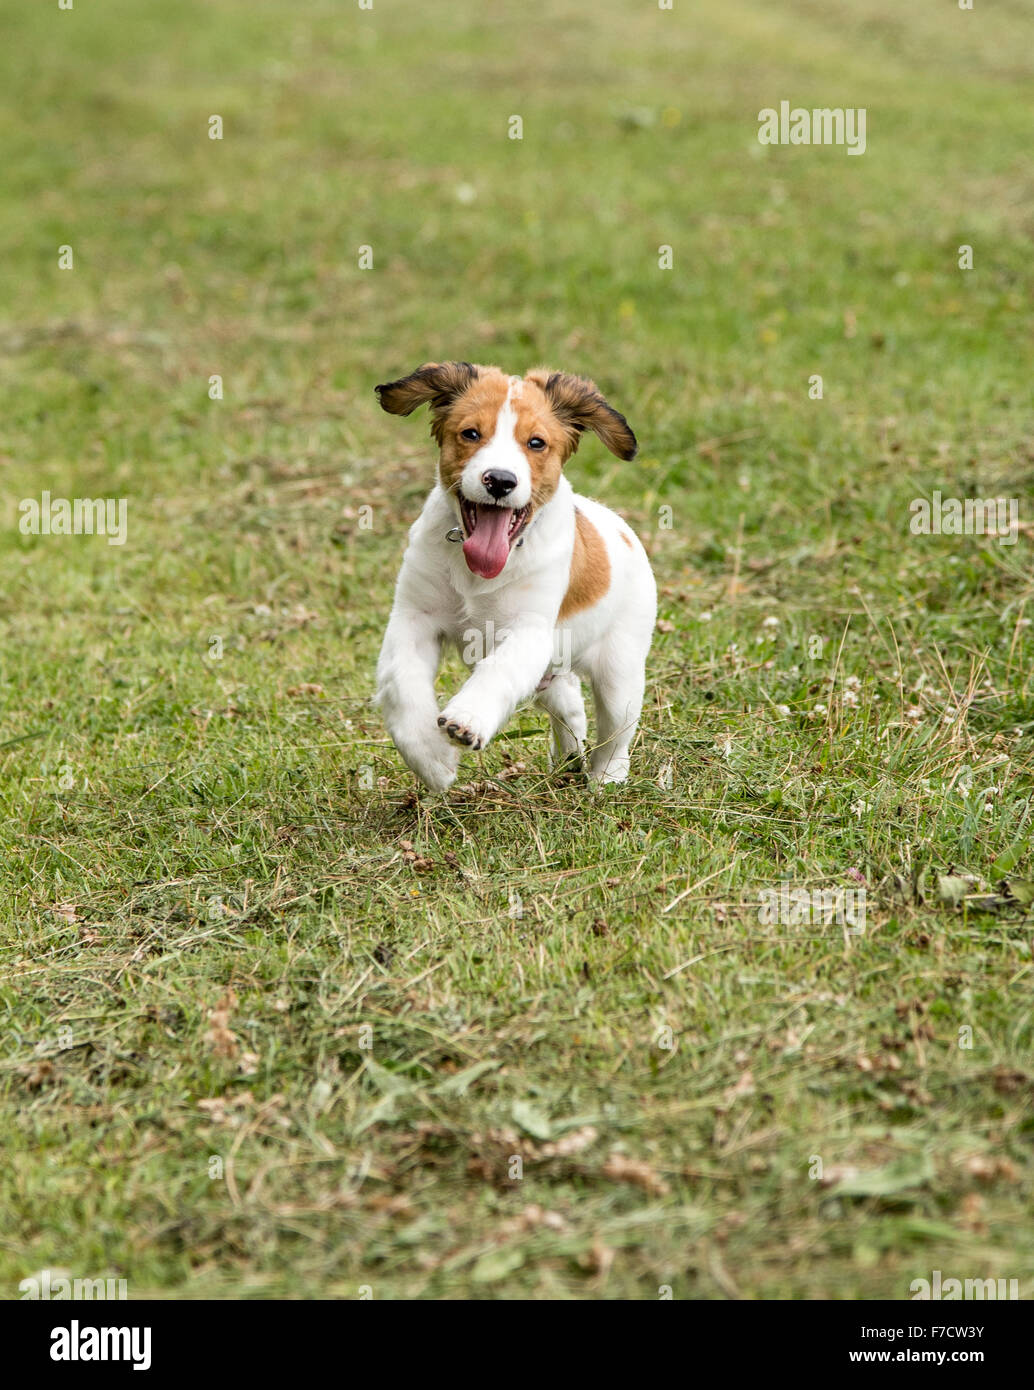 A kooikerhondje puppy having fun. Stock Photo